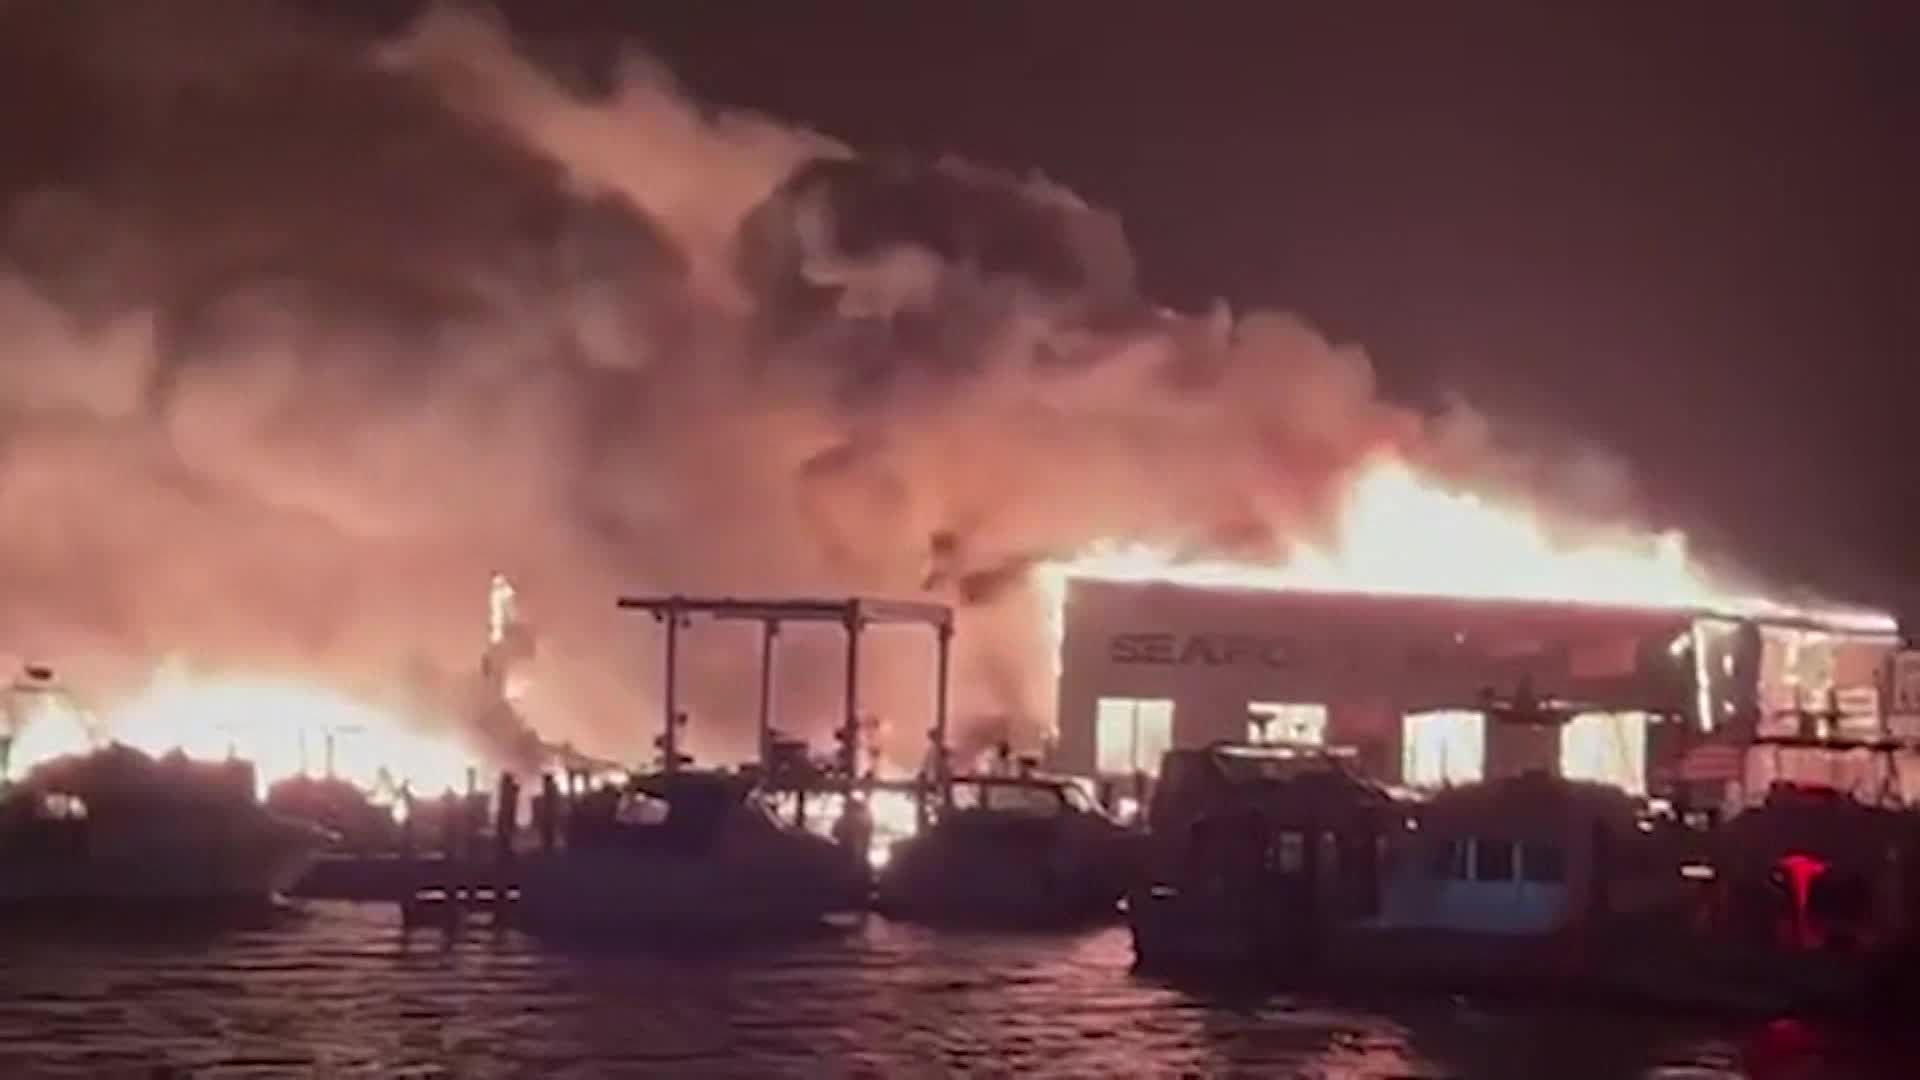 Raging fire destroys popular New England marina overnight